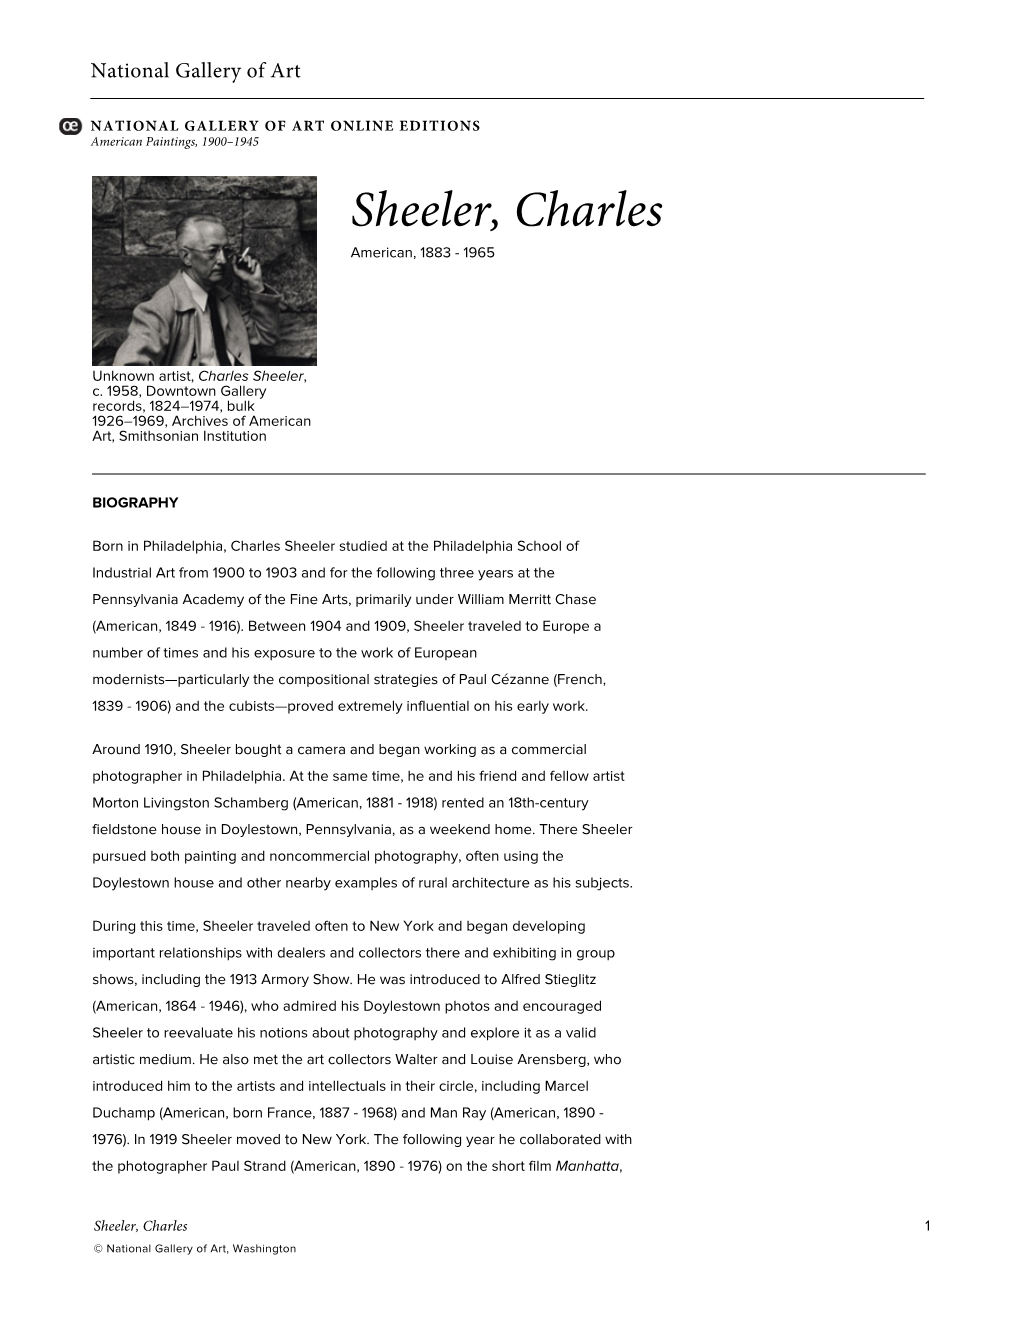 Sheeler, Charles American, 1883 - 1965